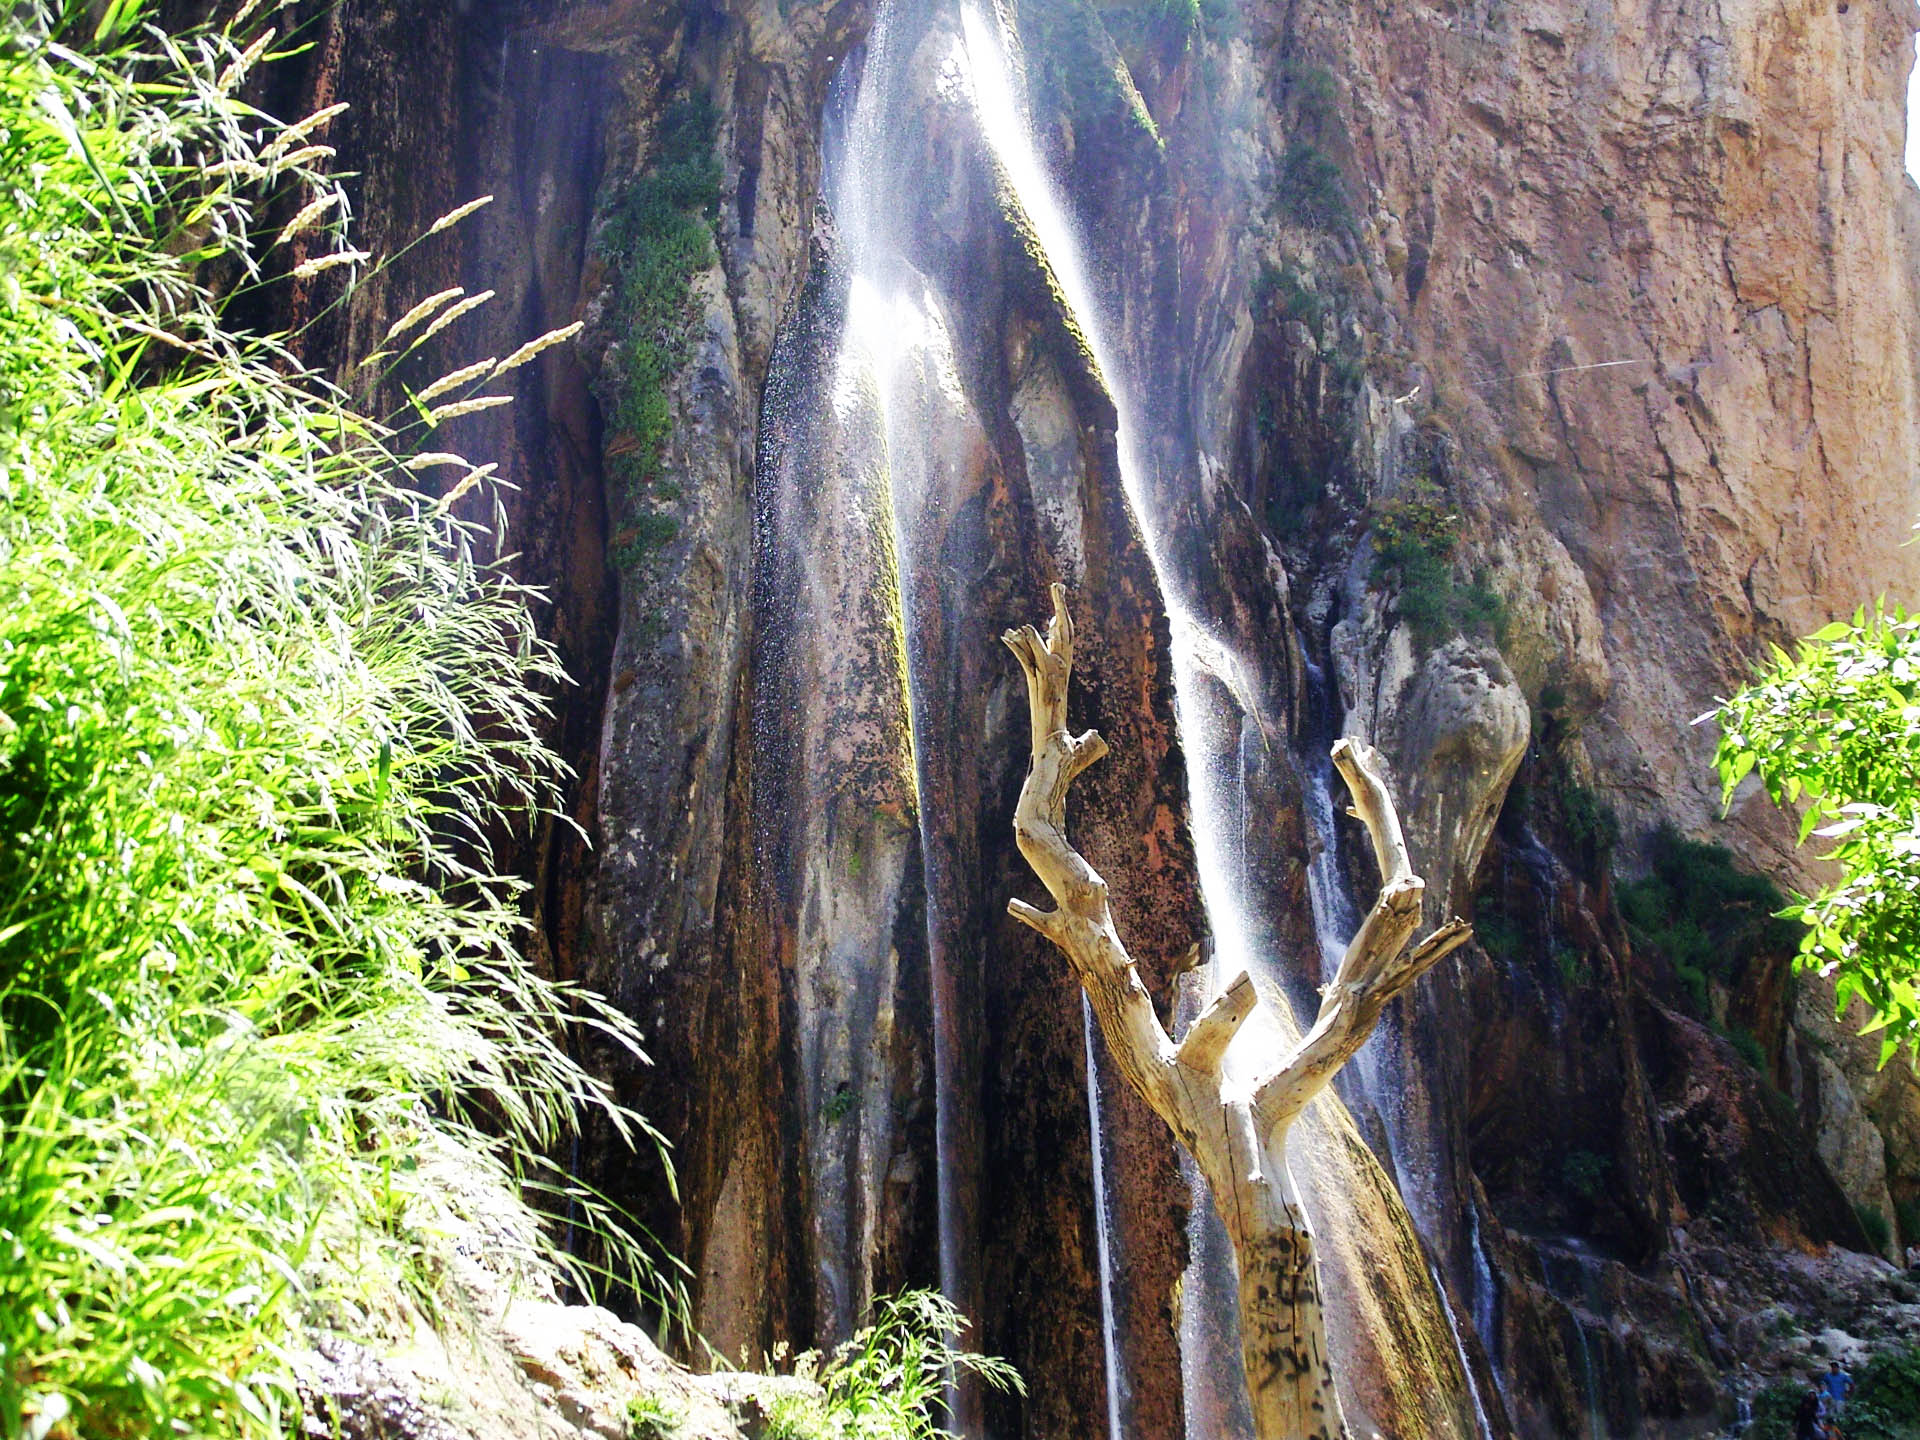 Margoon Waterfall: Iran's Natural Gem